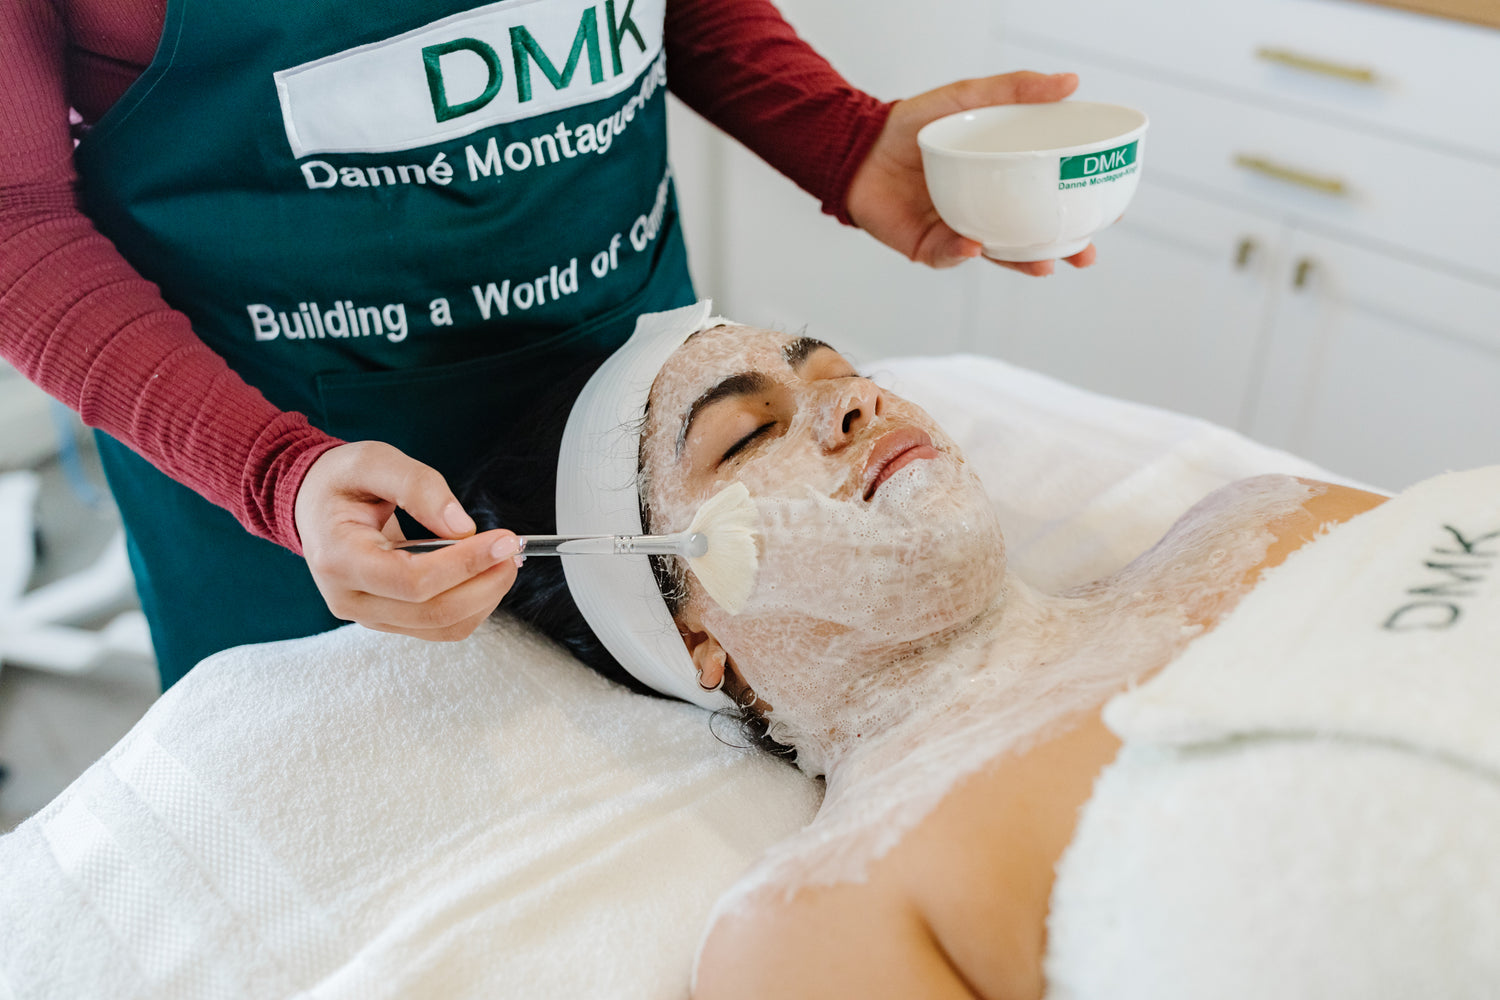 DMK Facial Treatment at Bare Complexion Acne and Skincare in Ventura, CA